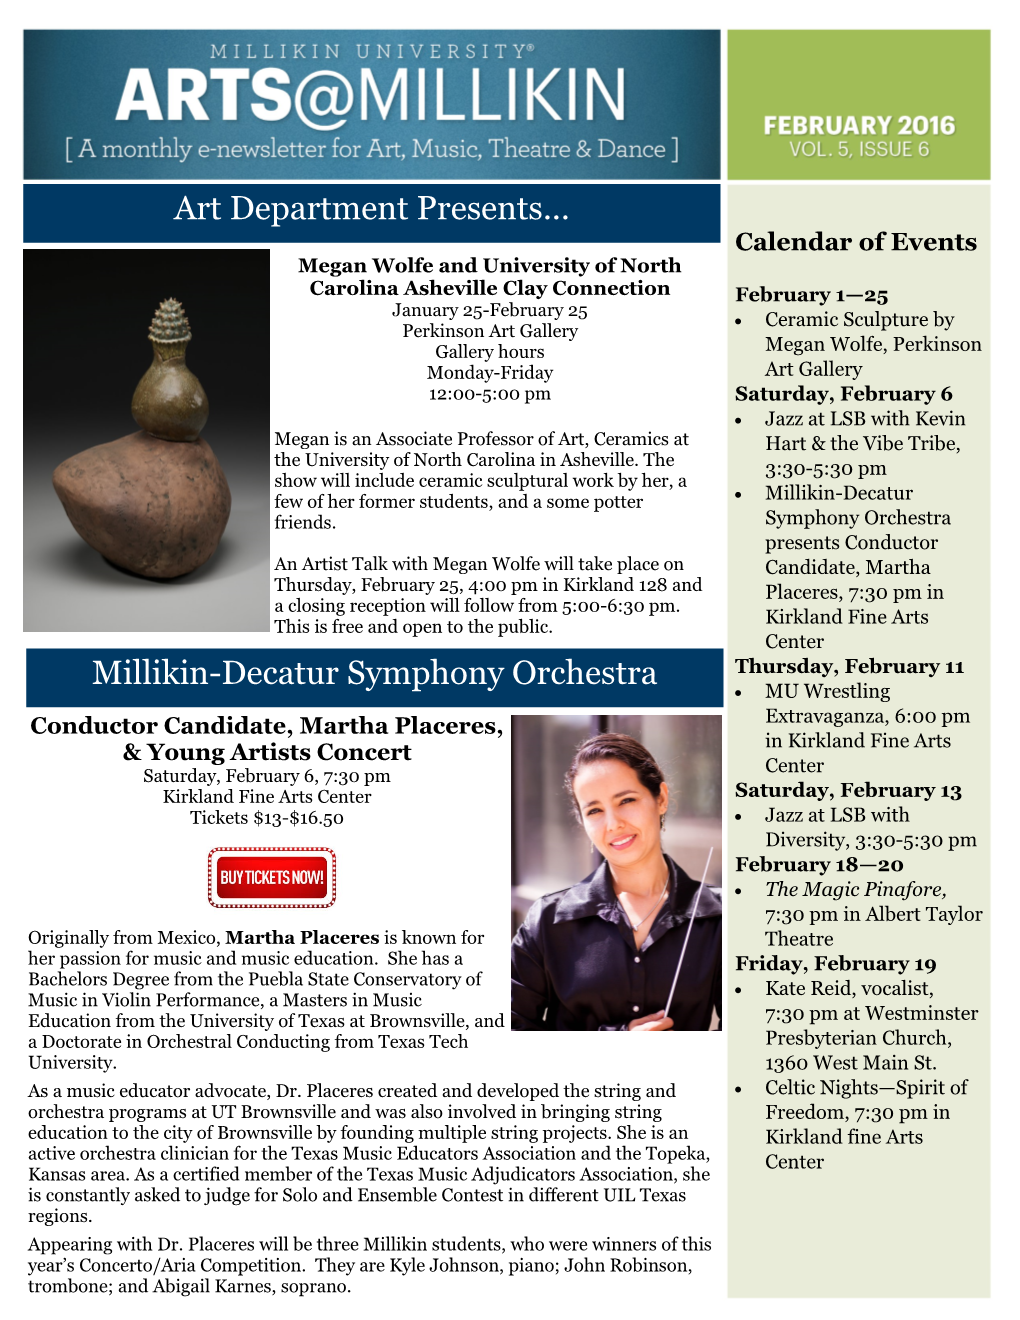 Art Department Presents... Millikin-Decatur Symphony Orchestra